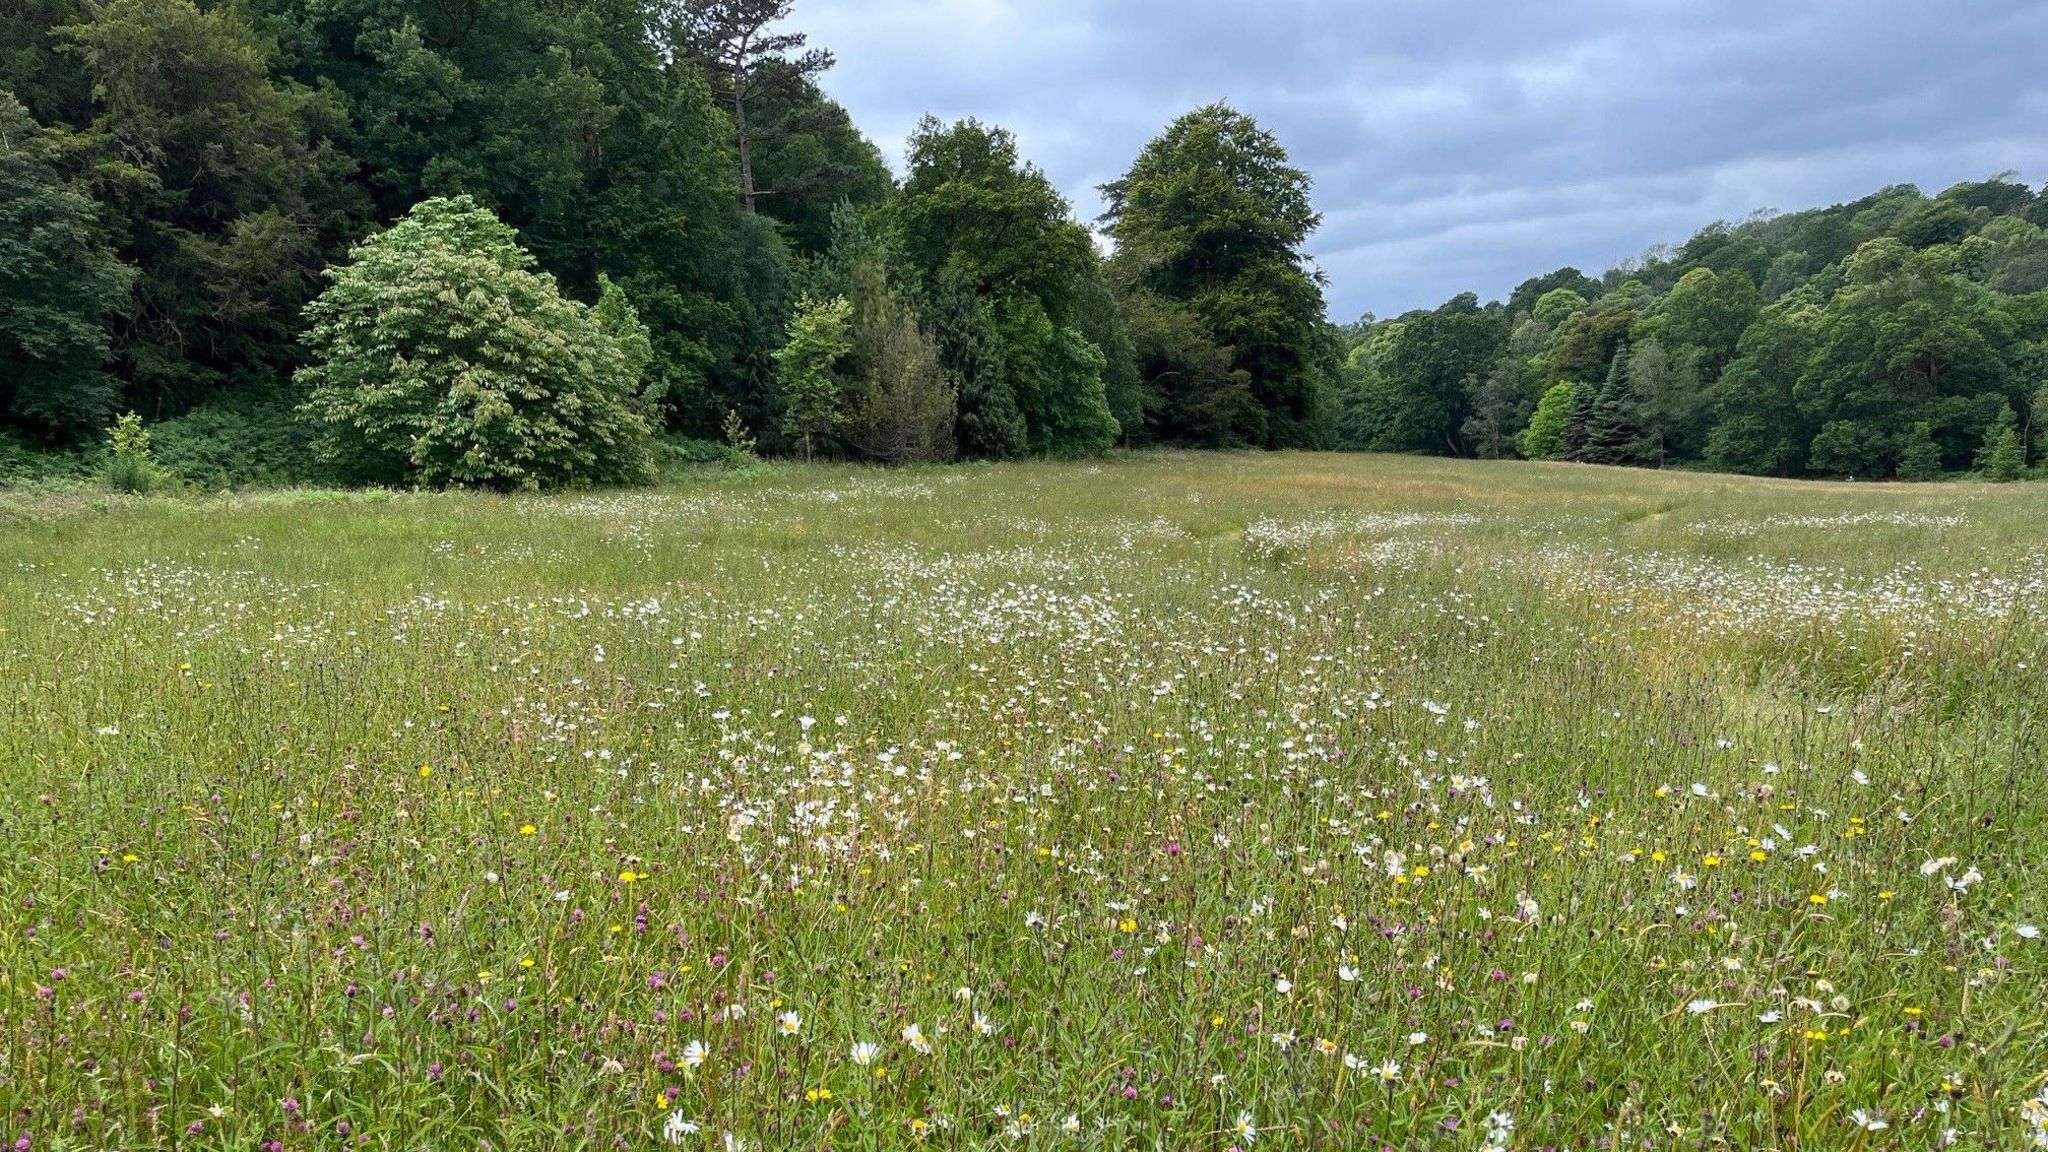 The meadow at Wakehurst